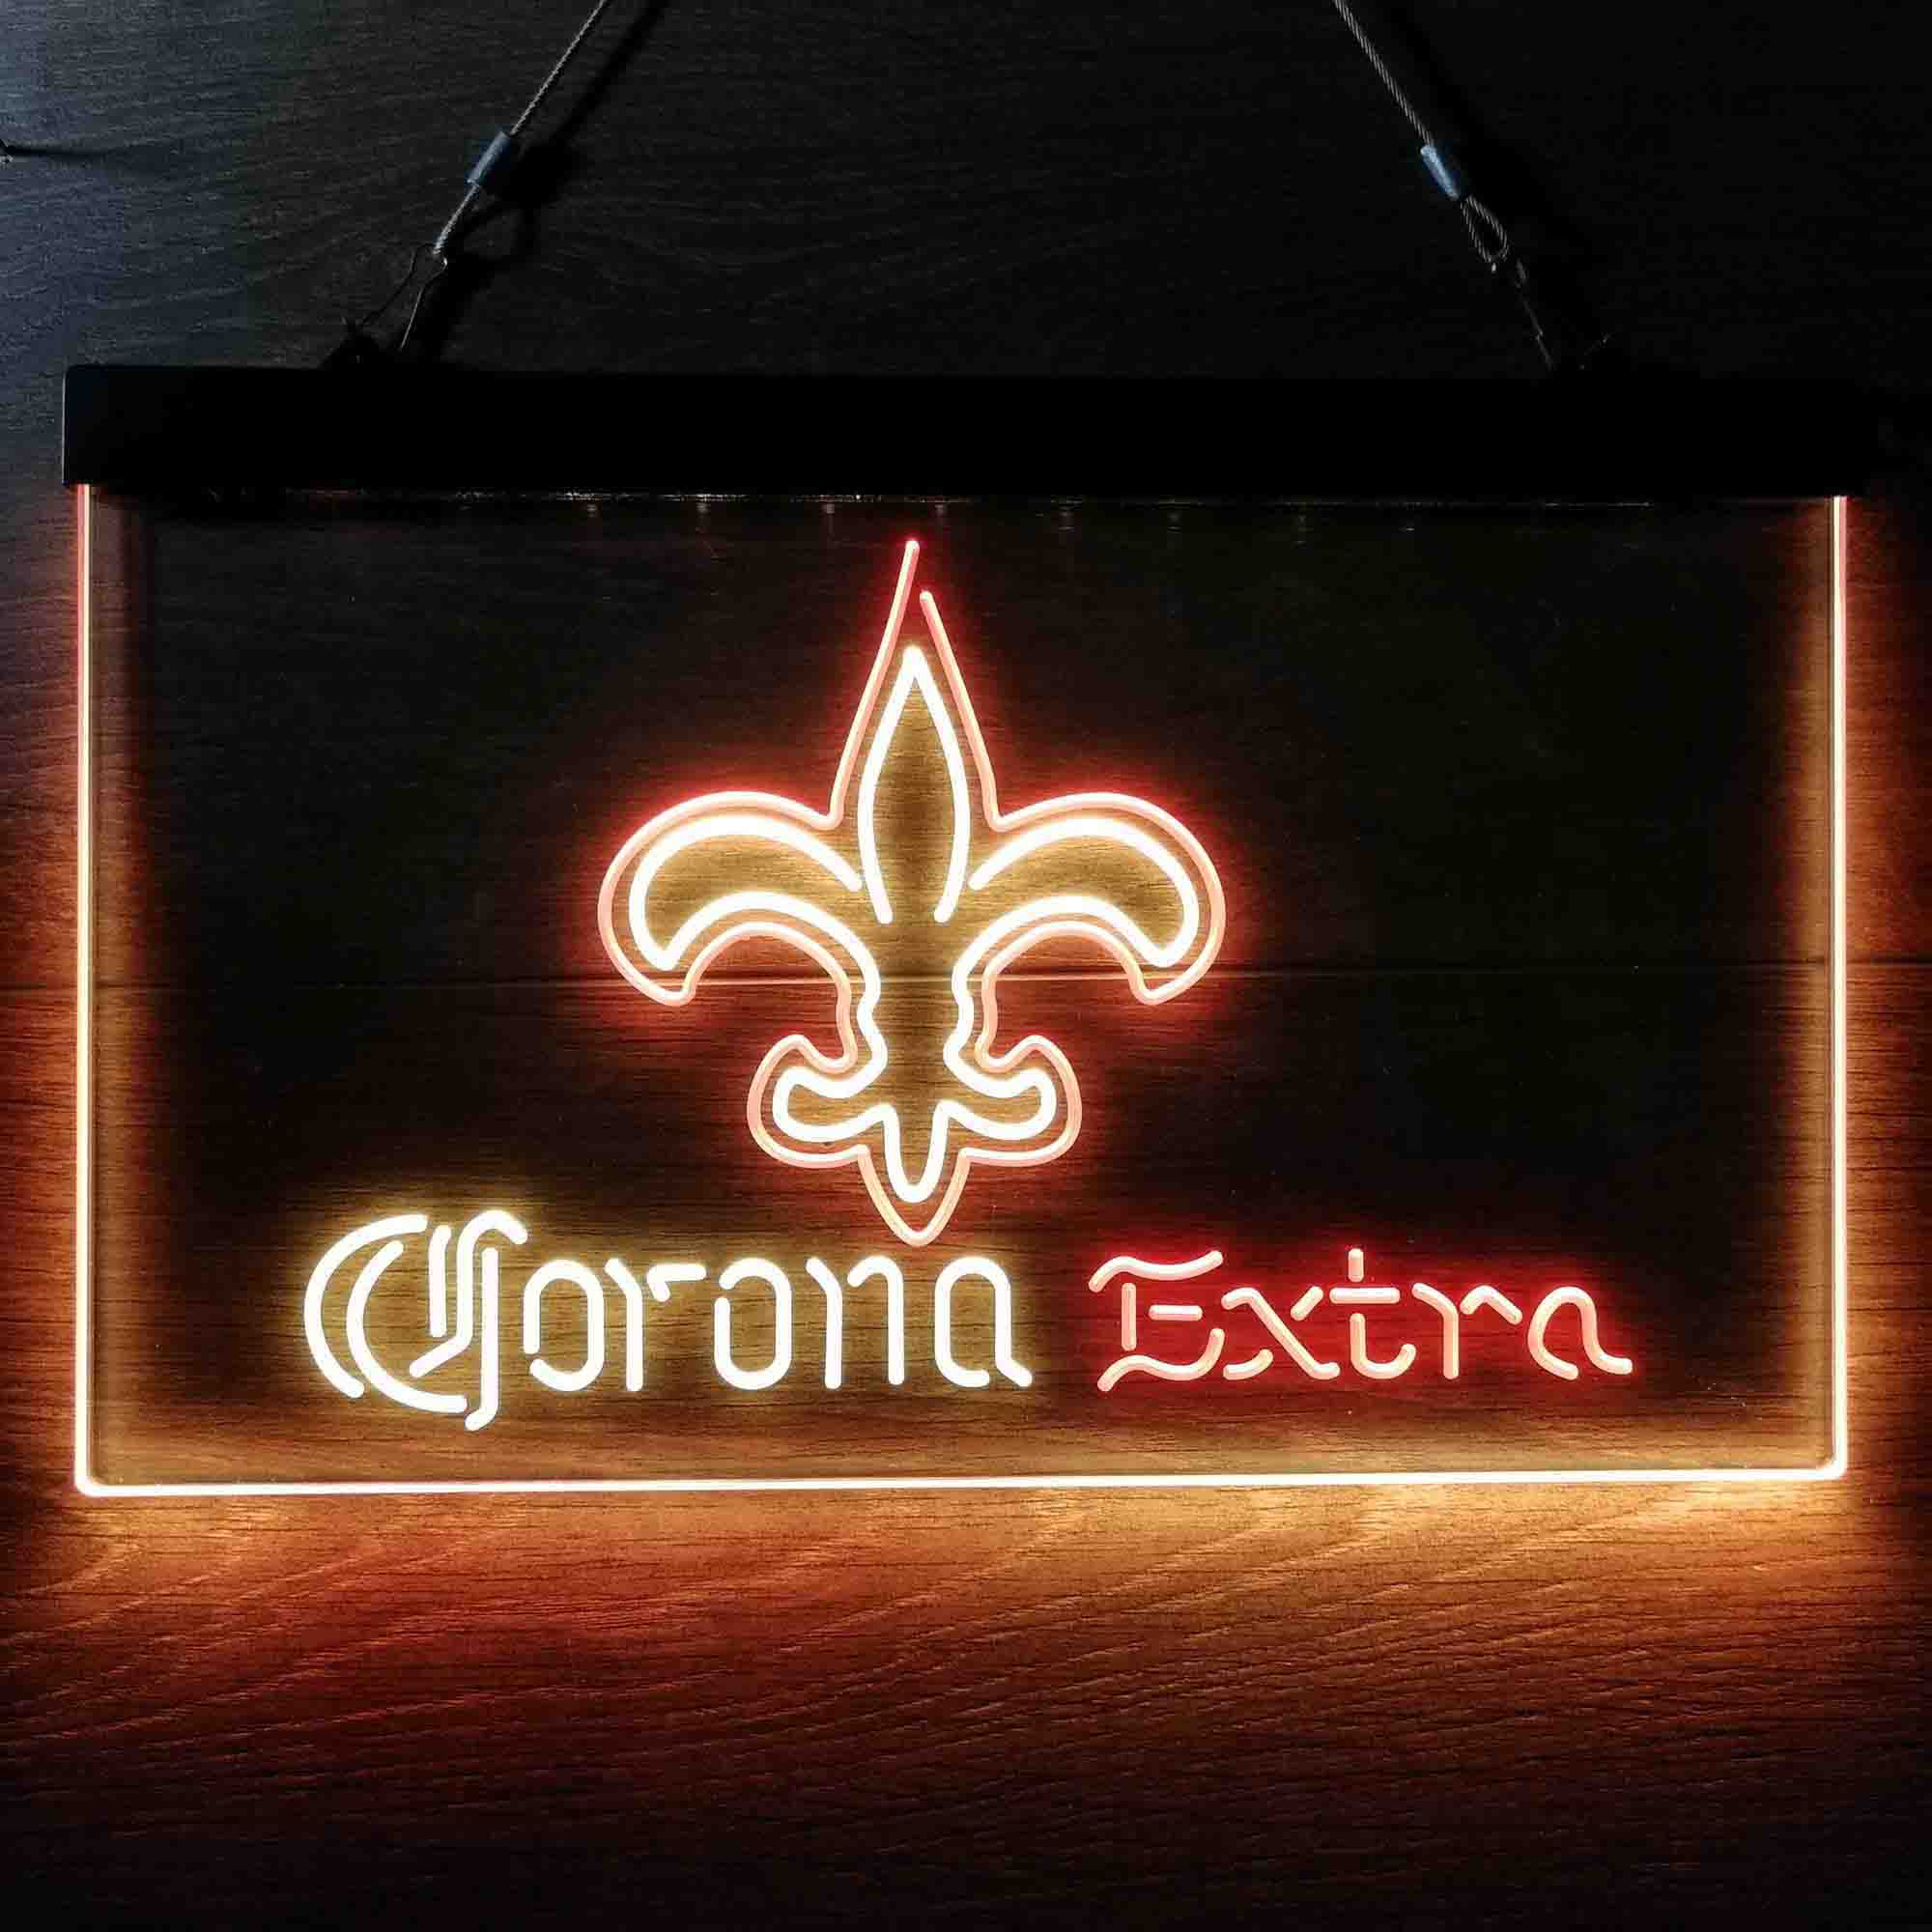 Corona Extra Bar New Orleans Saints Est. 1967 Neon-Like LED Sign